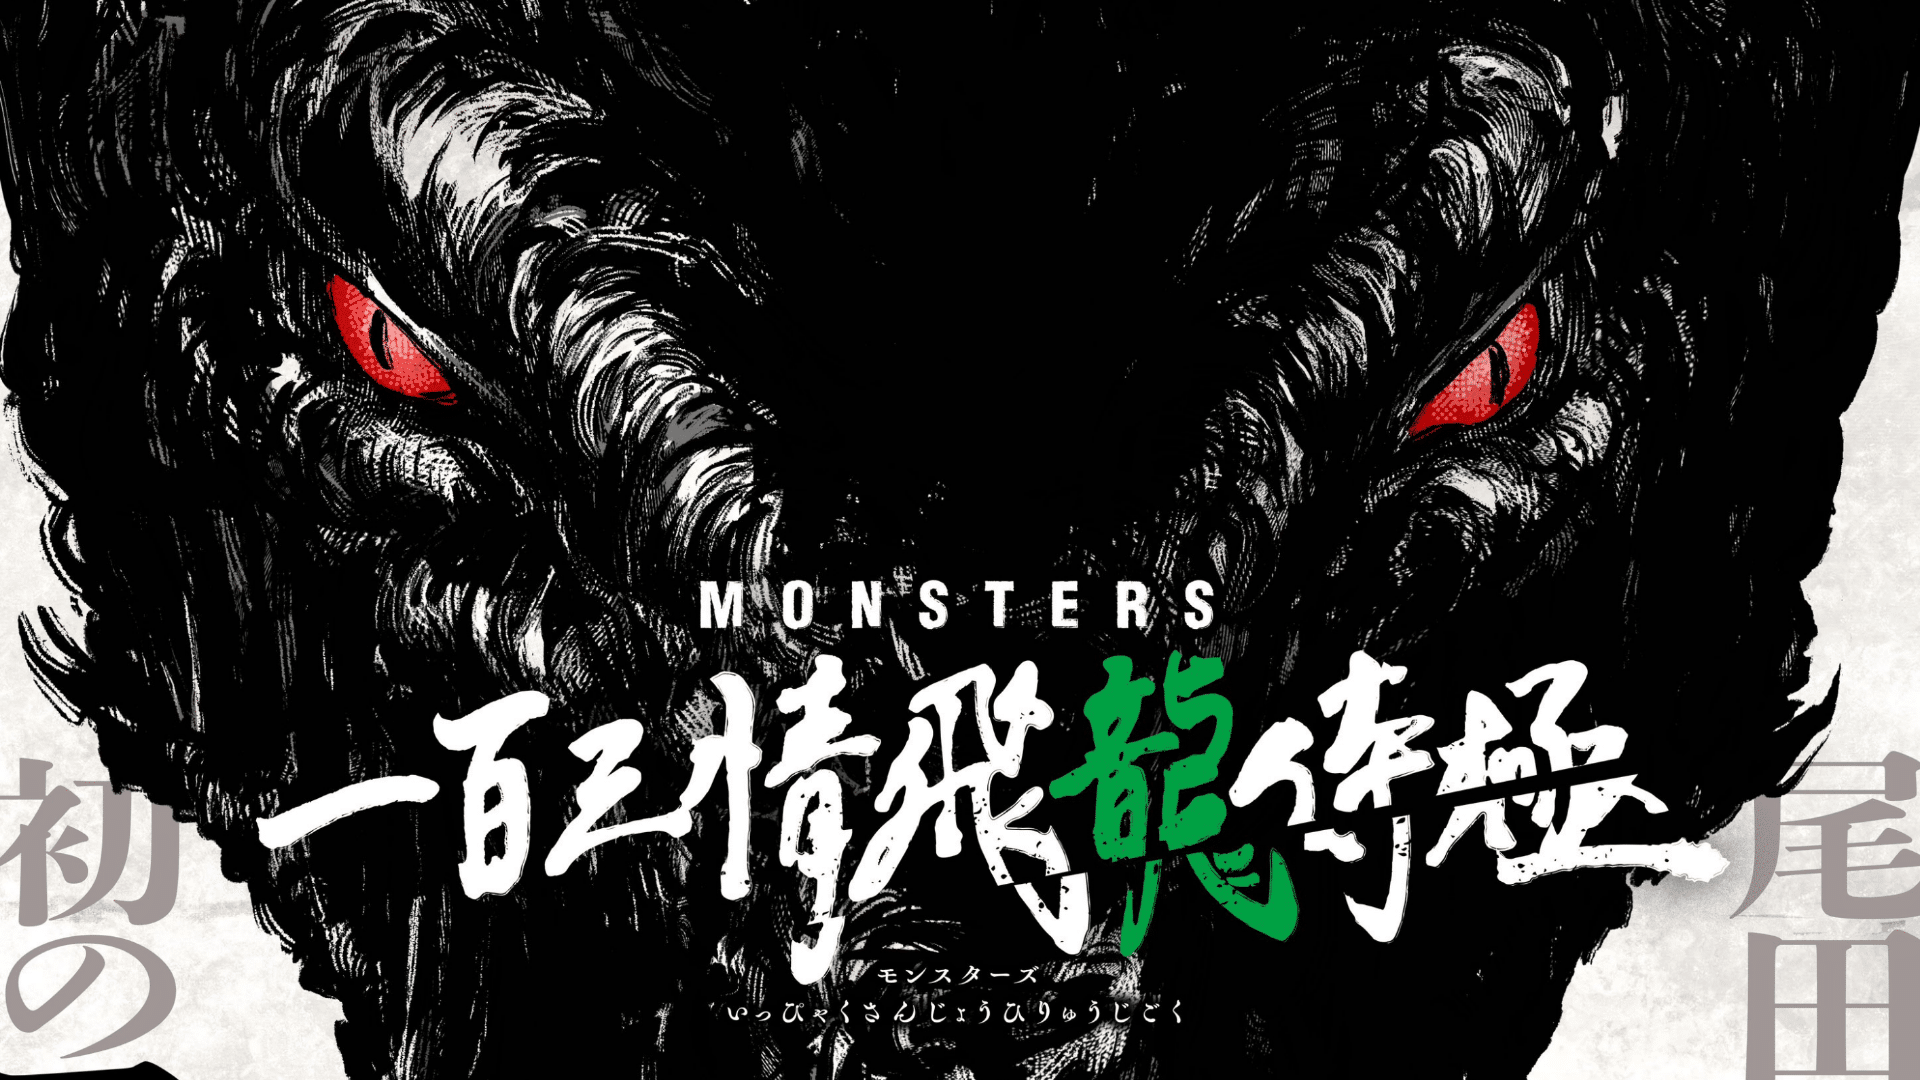 eiichiro oda one piece monsters poster